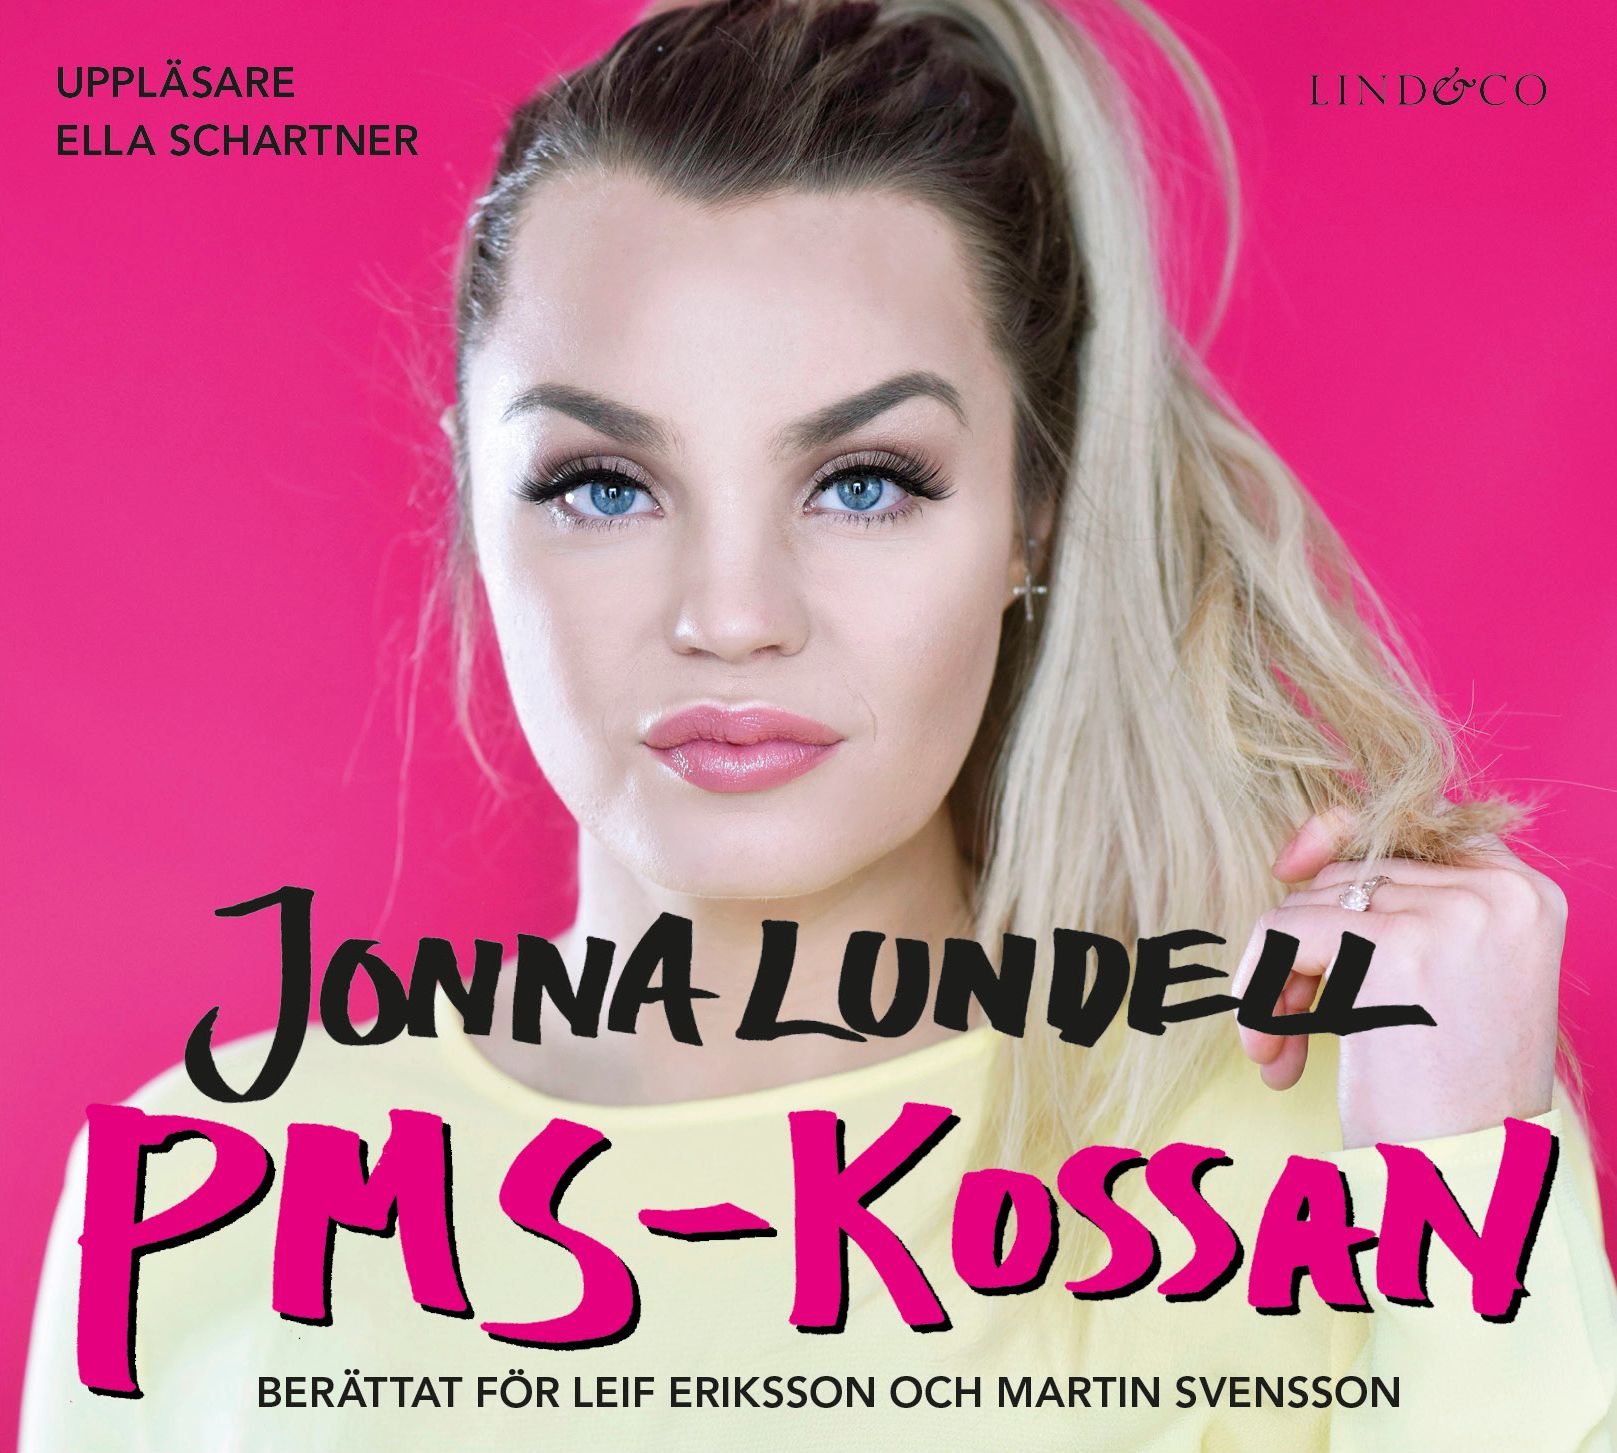 Jonna Lundell - PMS-kossan, audiobook by Leif Eriksson, Jonna Lundell, Martin Svensson